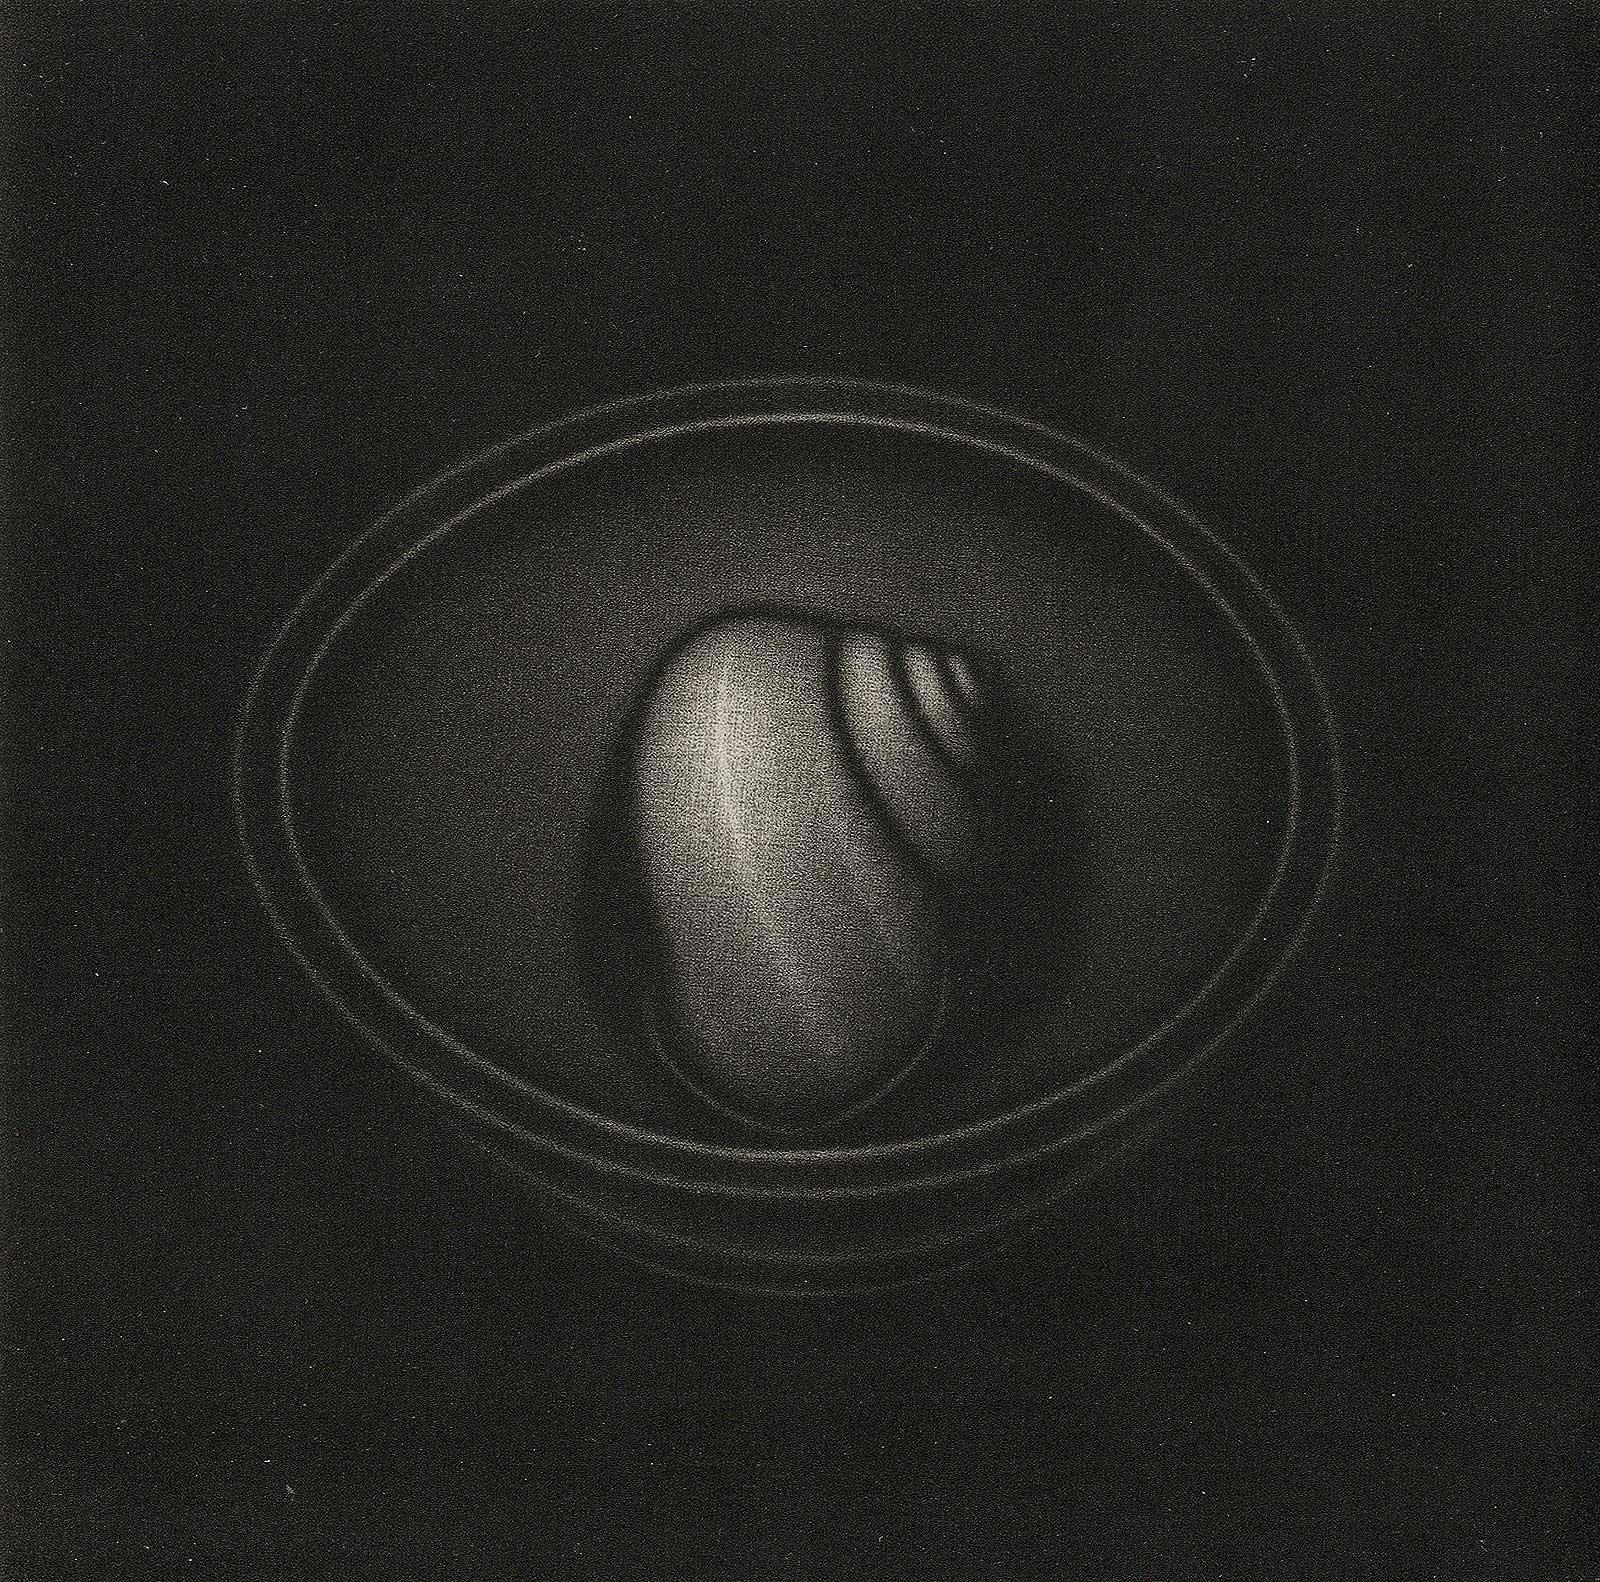 Leonard Merchant Animal Print - Snail in a Bowl (Artist Proof inscribed to Fritz Eichenberg)